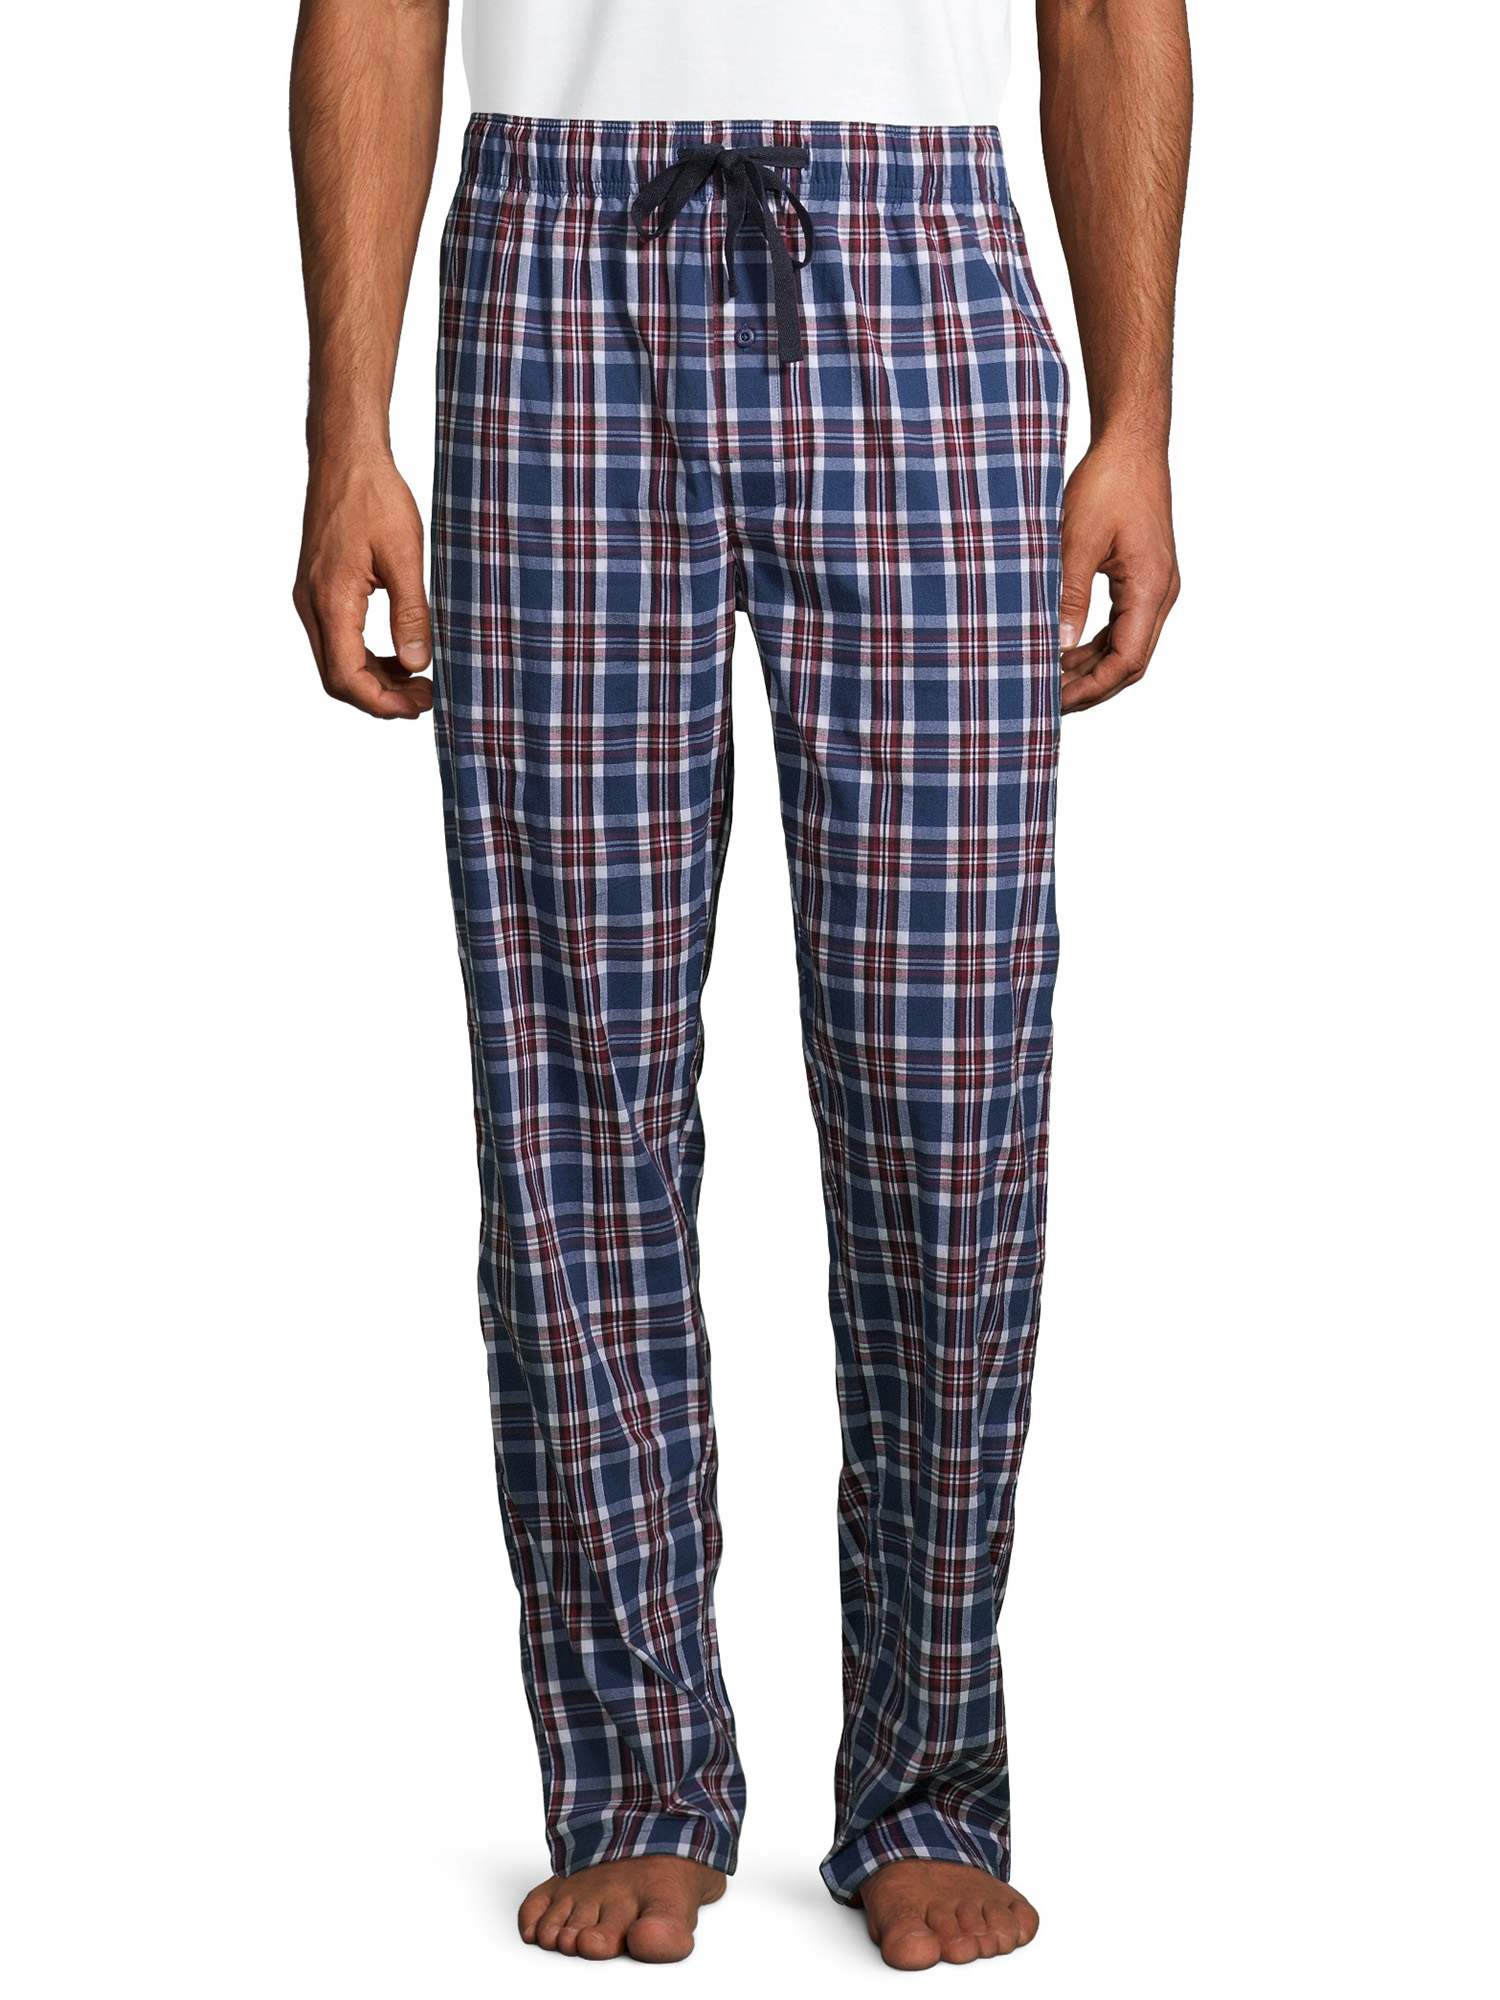 Hanes Mens Mens Printed Knit Pajama Pant Pajama Bottom